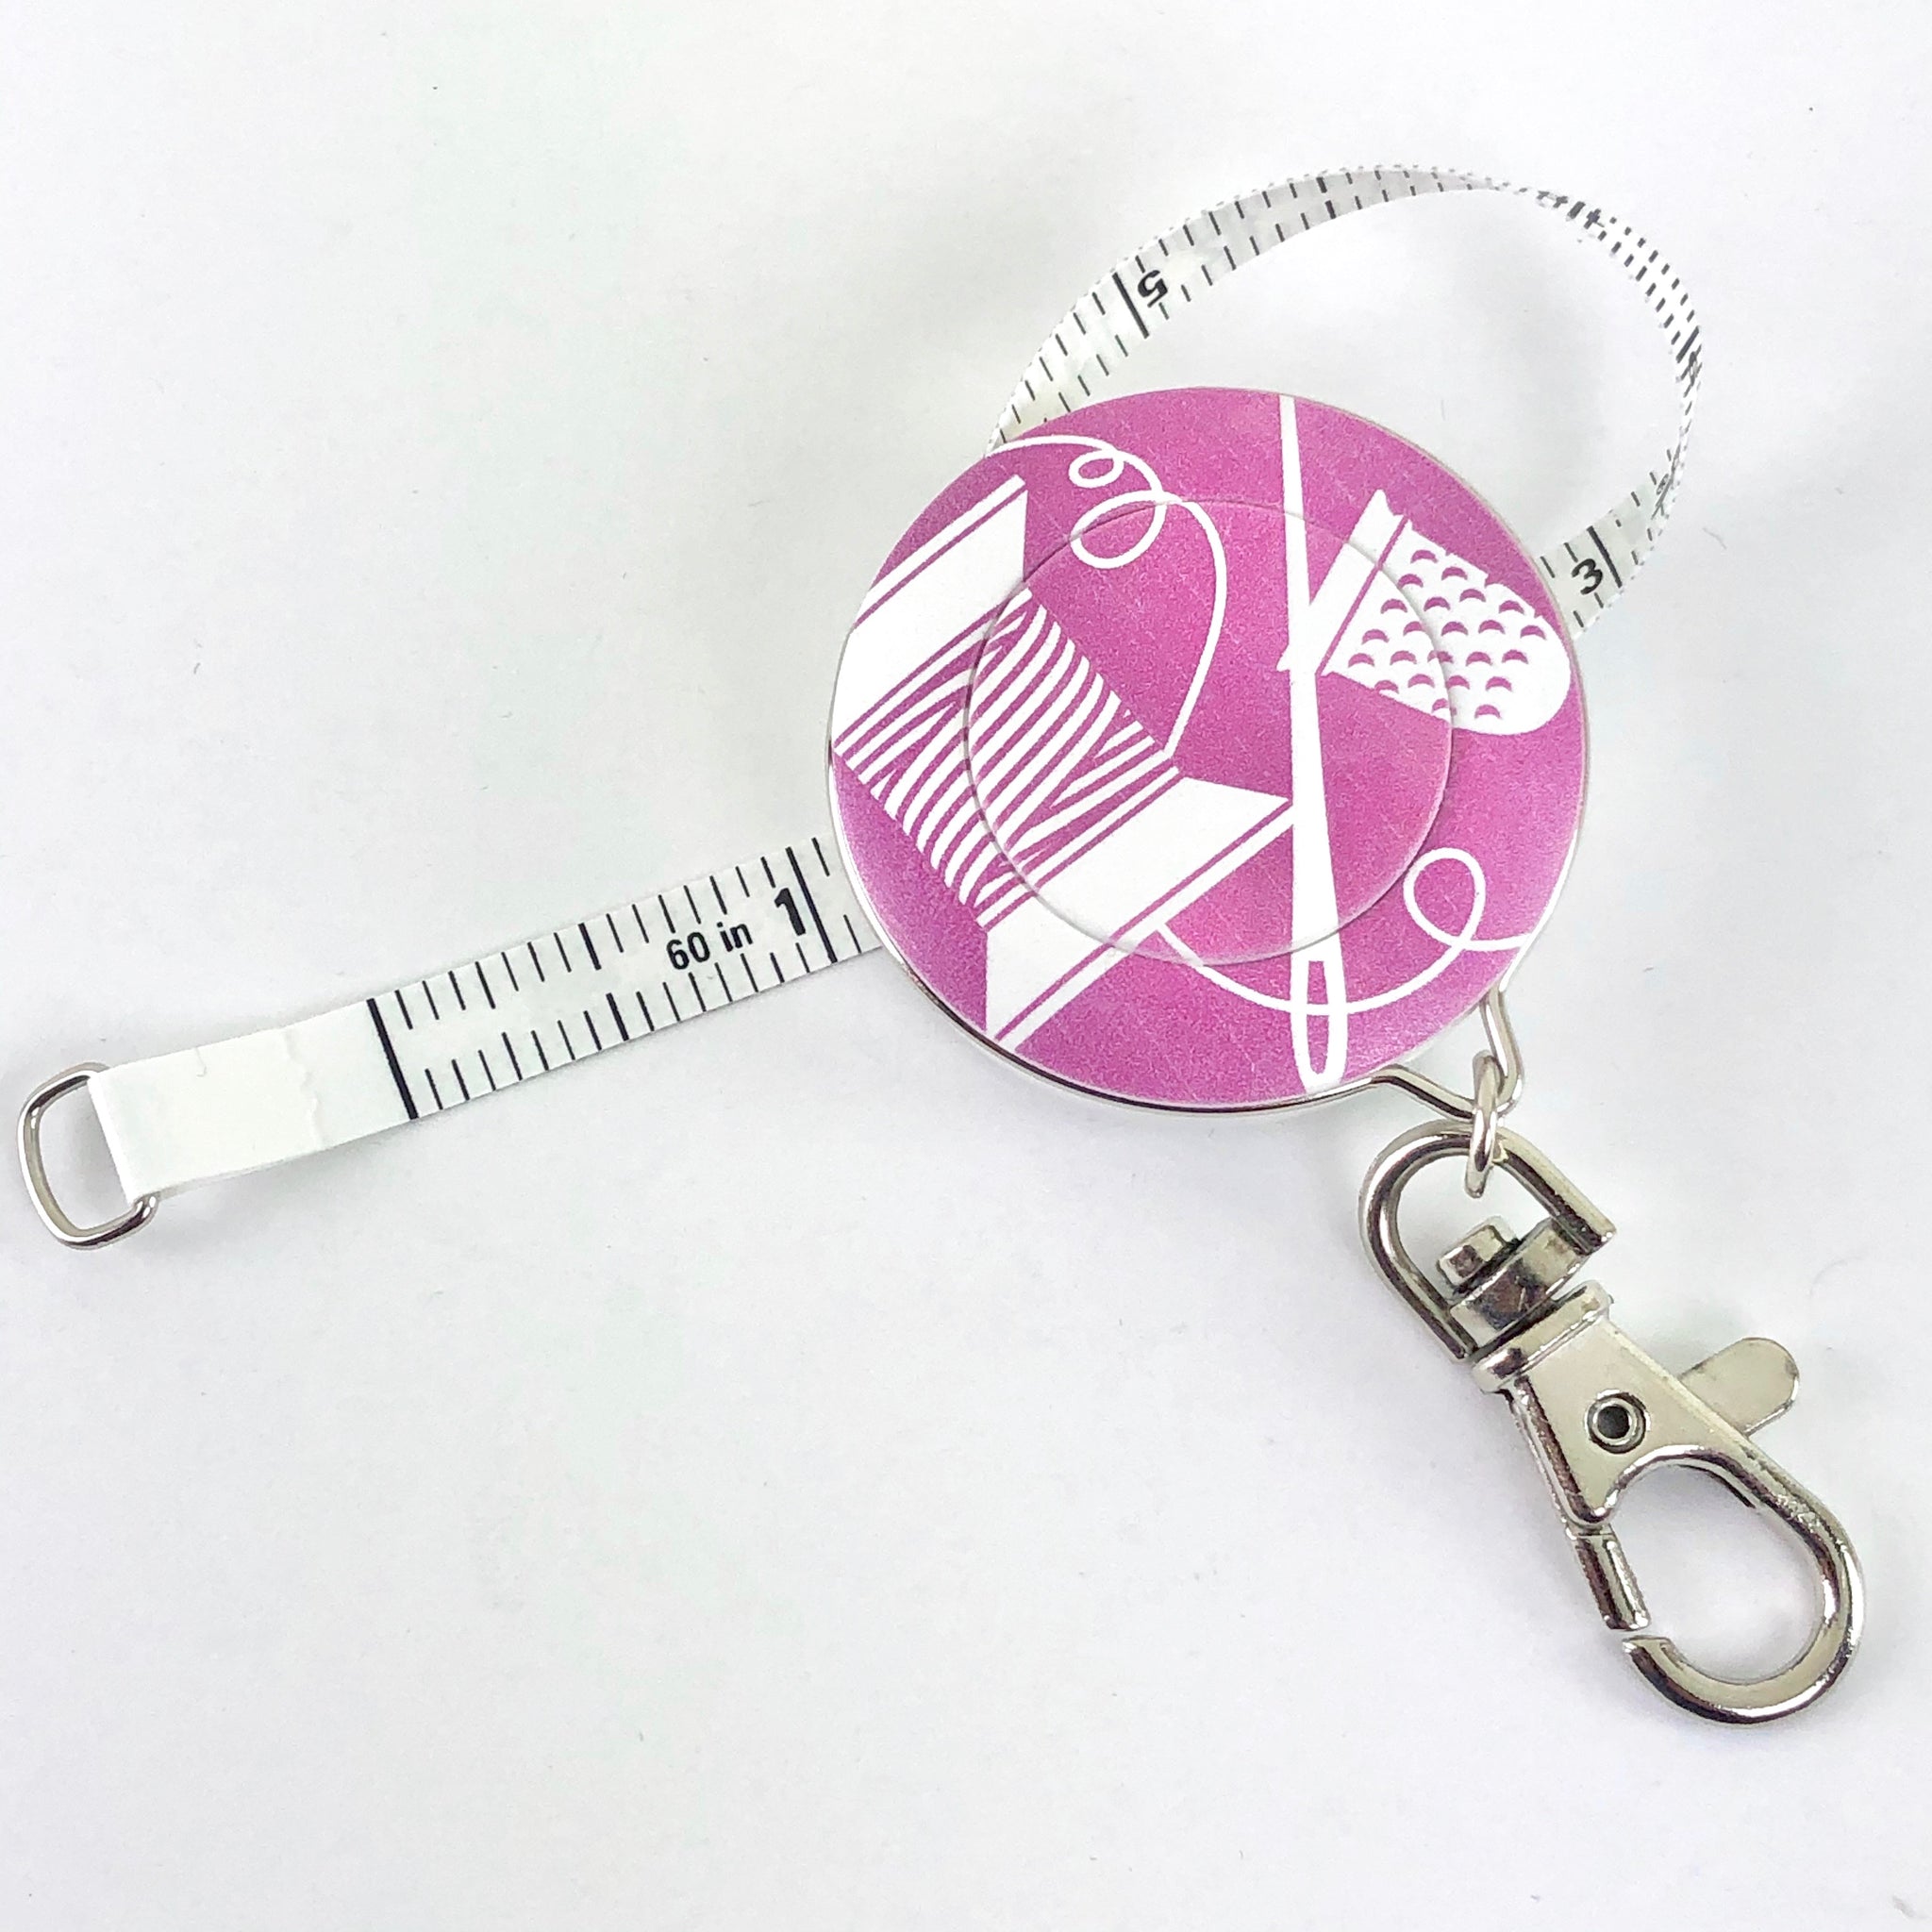 Buy Cute Mini Measuring Tape online